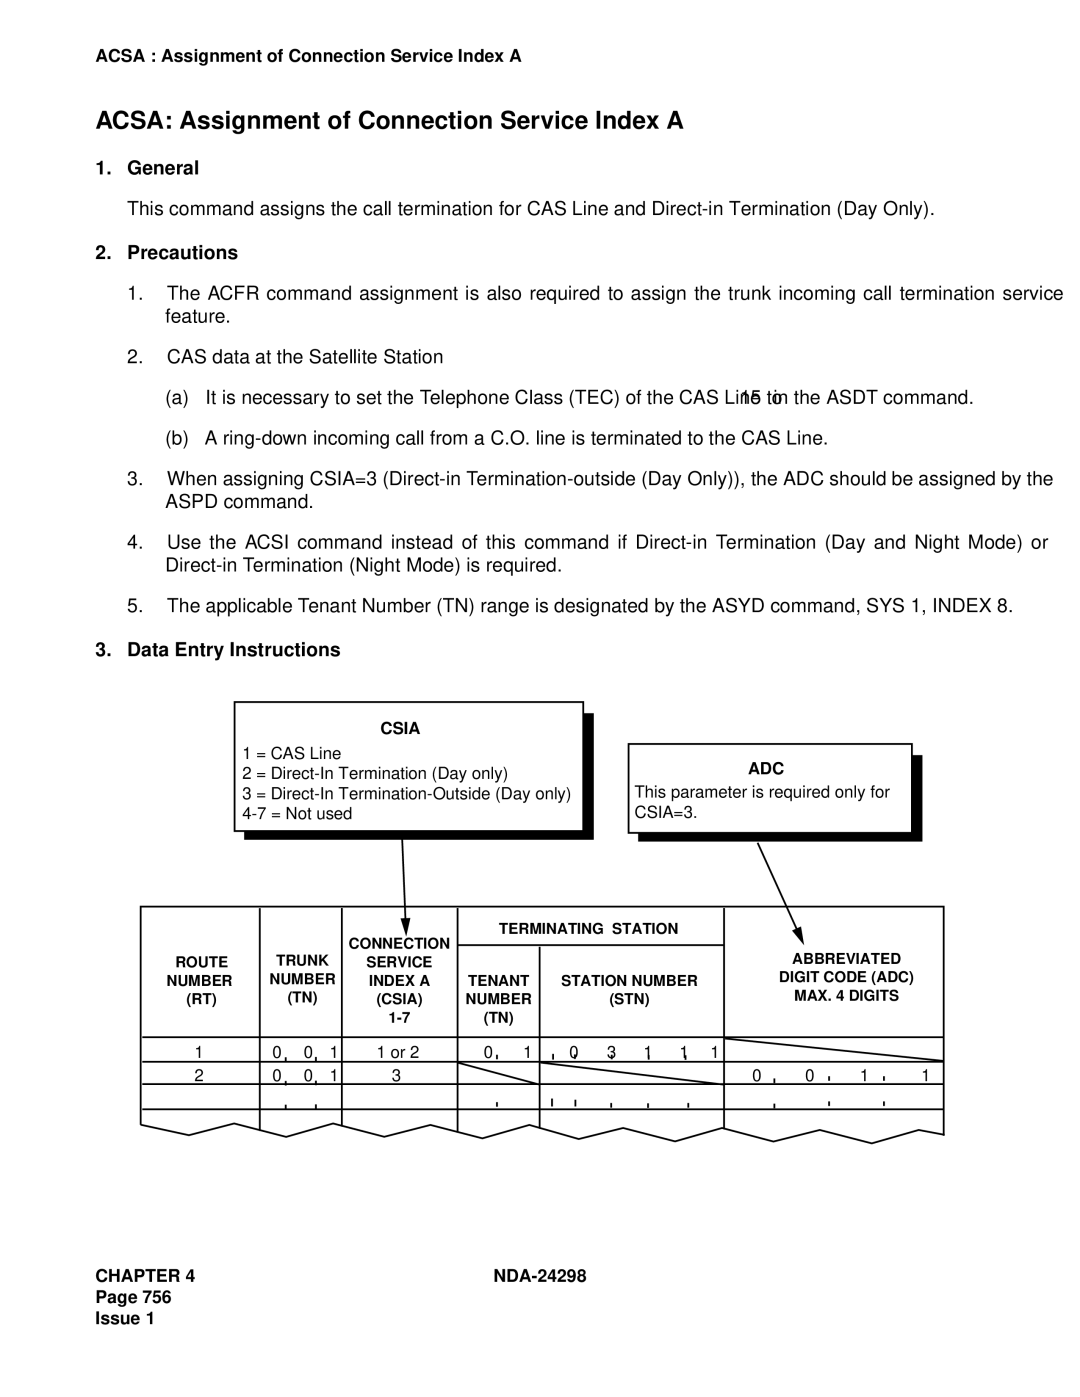 NEC NDA-24298 manual Acsa Assignment of Connection Service Index a, Csia 